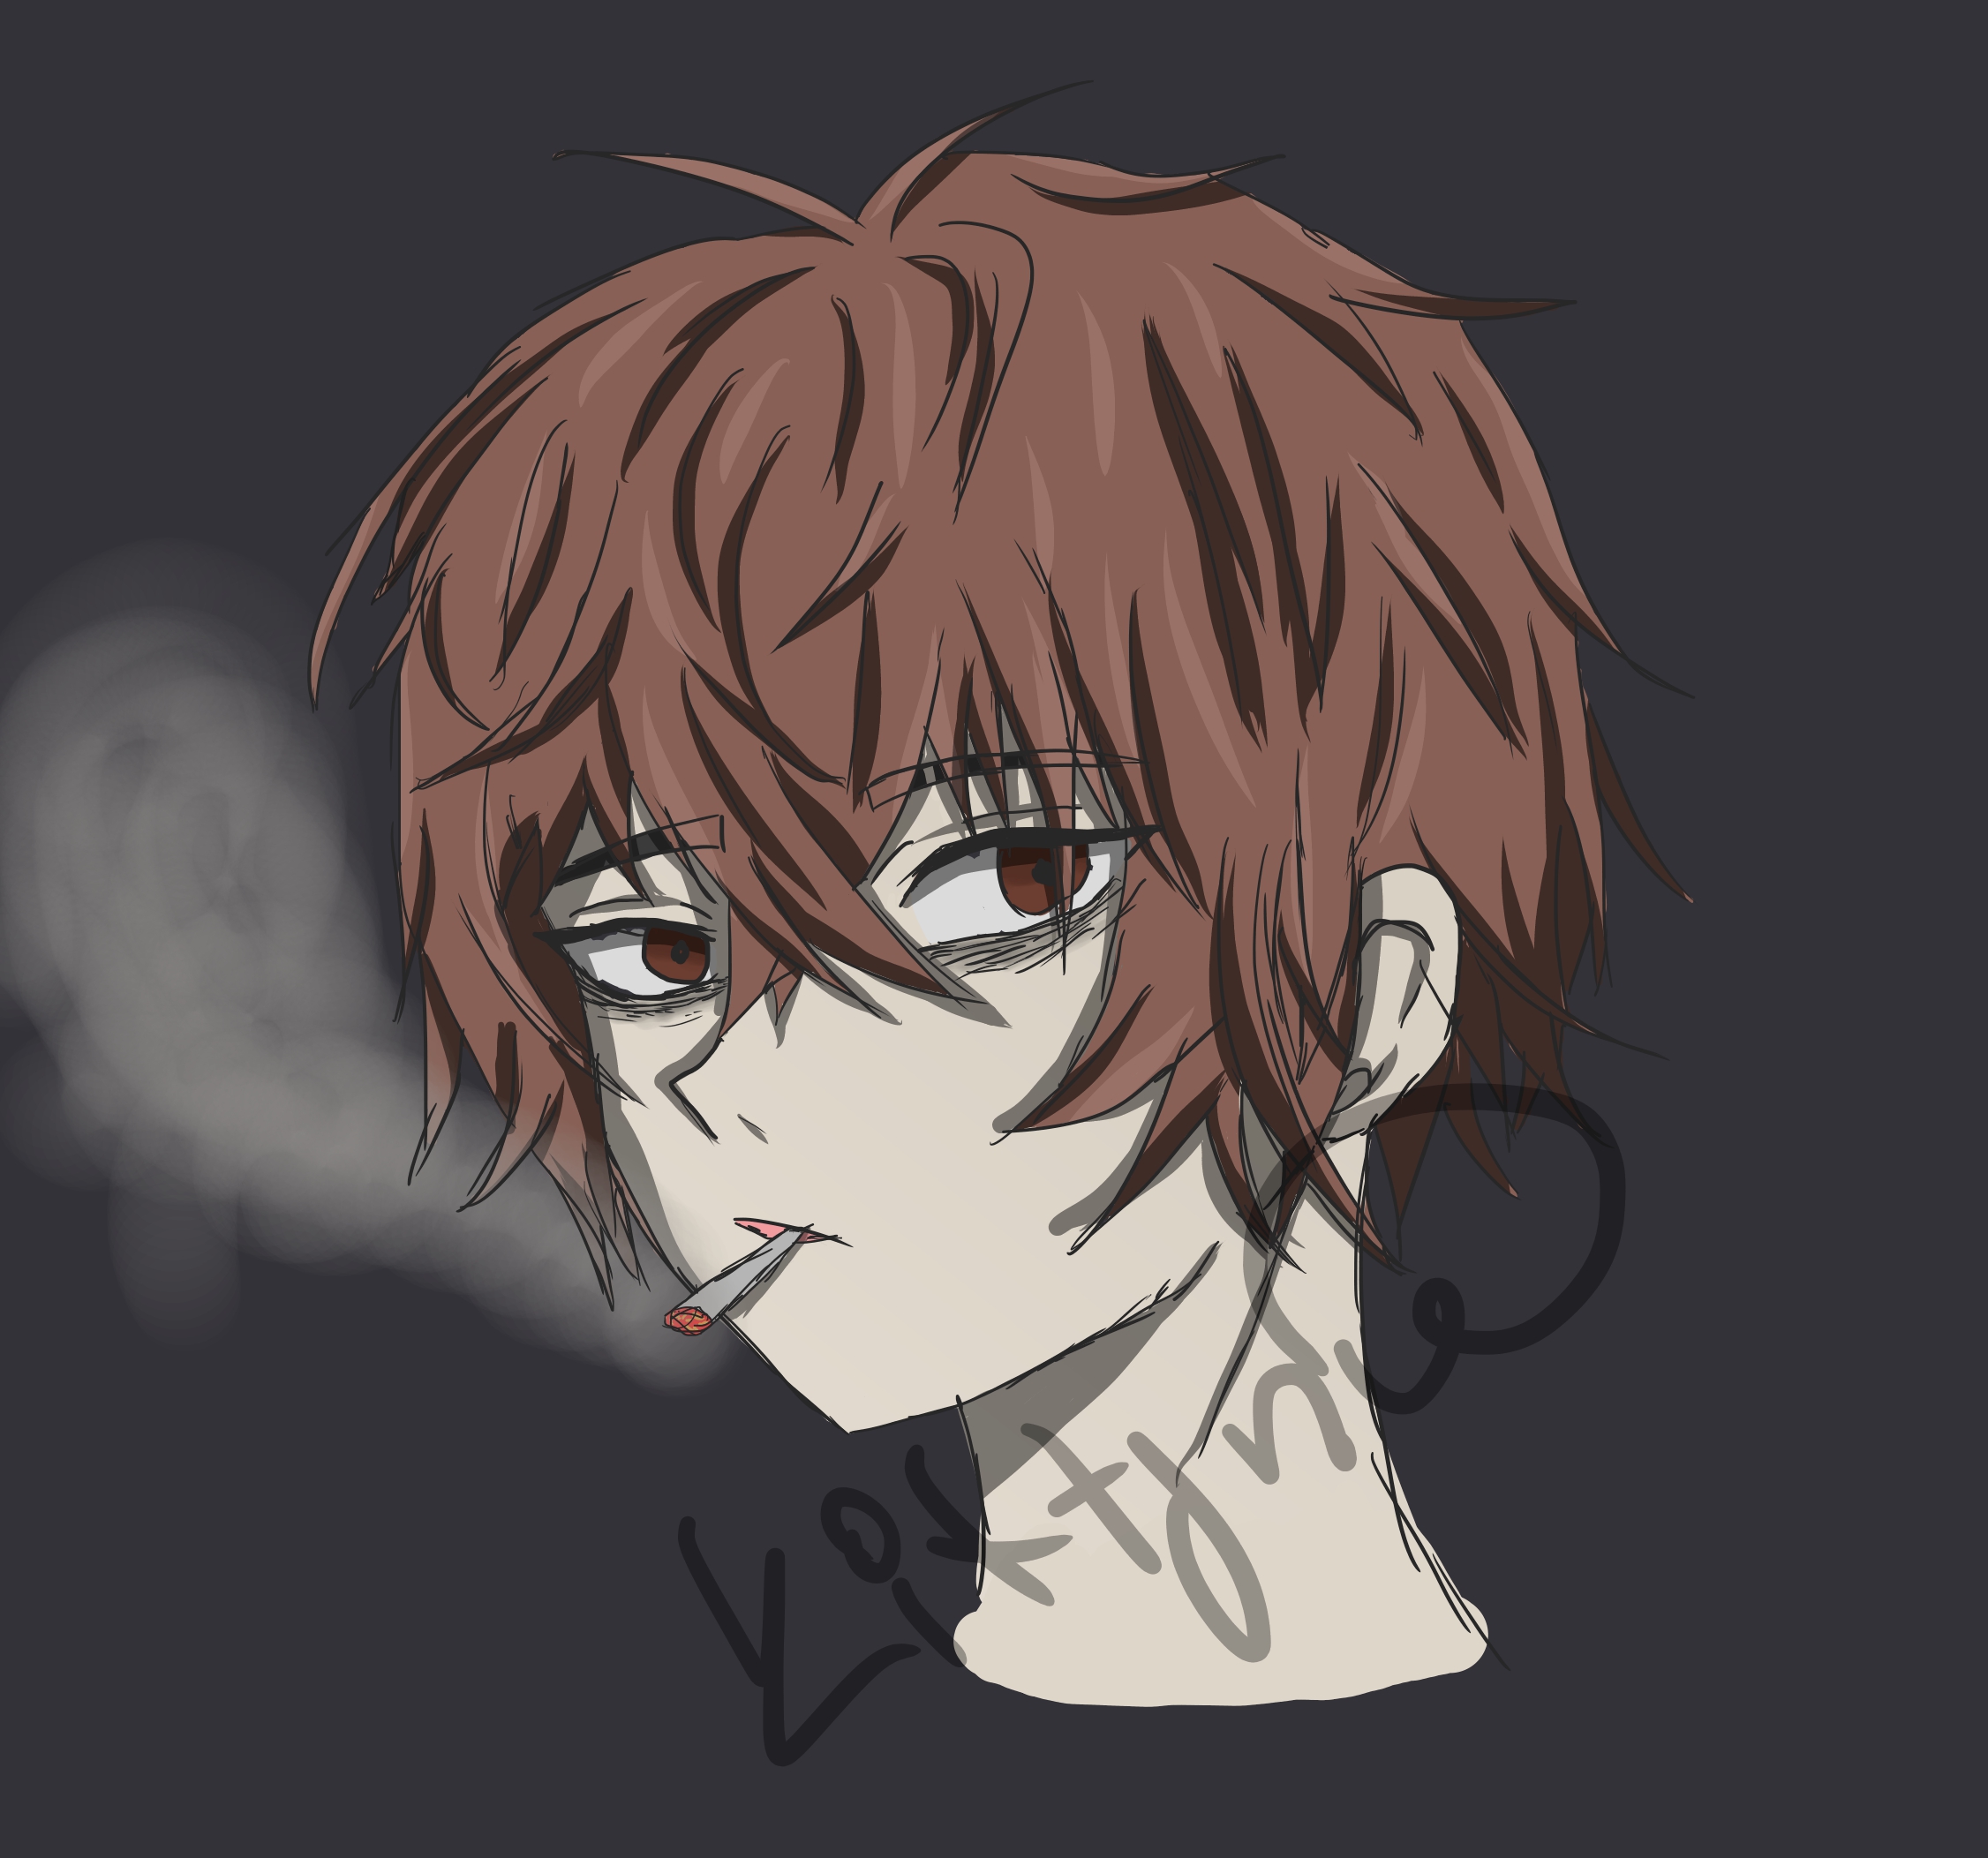 Brown hair anime boy smoking icon by KittaKittyna on DeviantArt